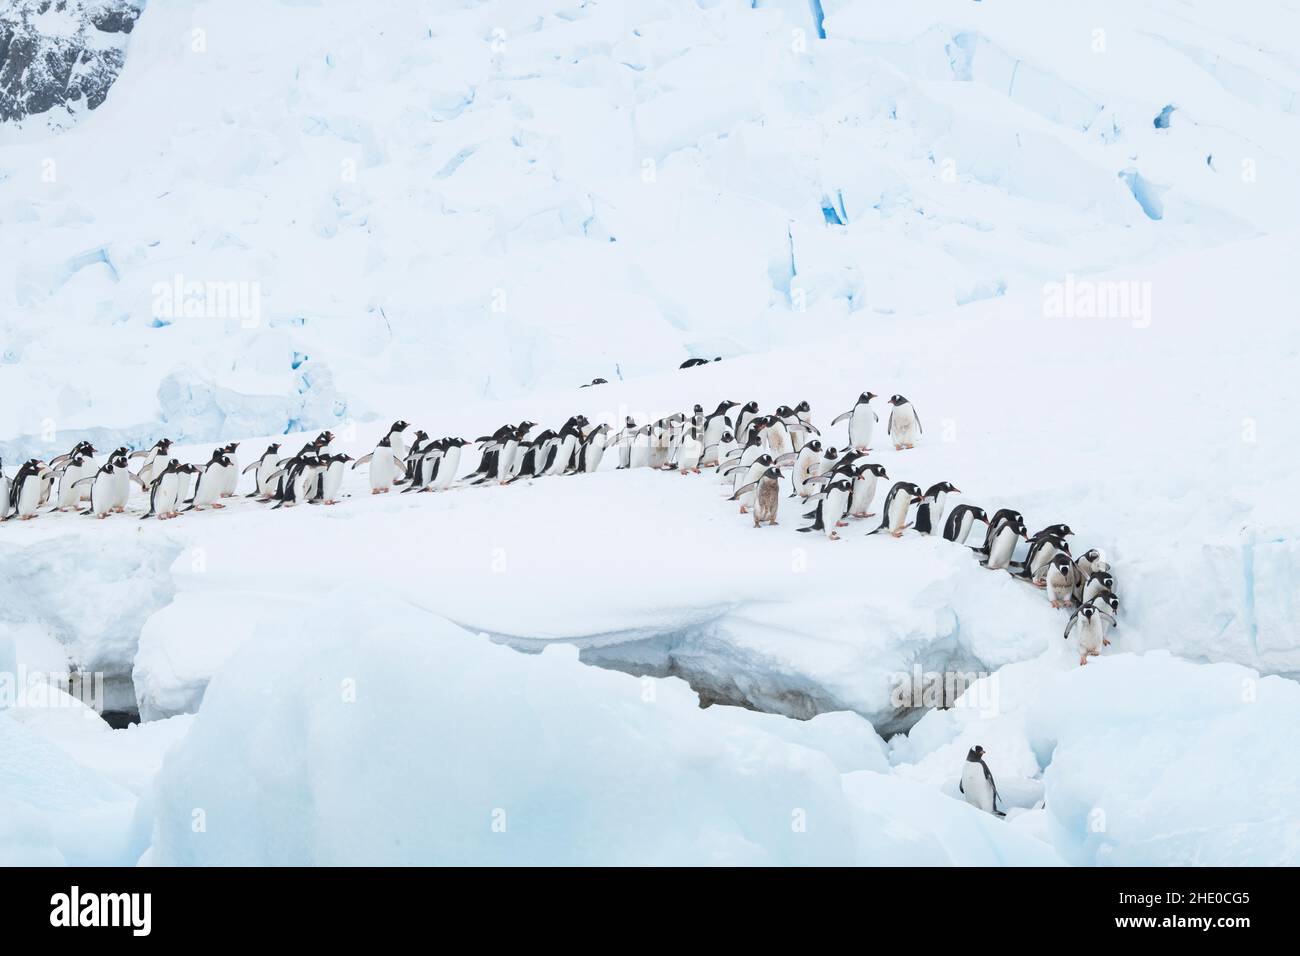 Gentoo penguins march in a line to enter the ocean at Neko Harbor, Antarctica. Stock Photo